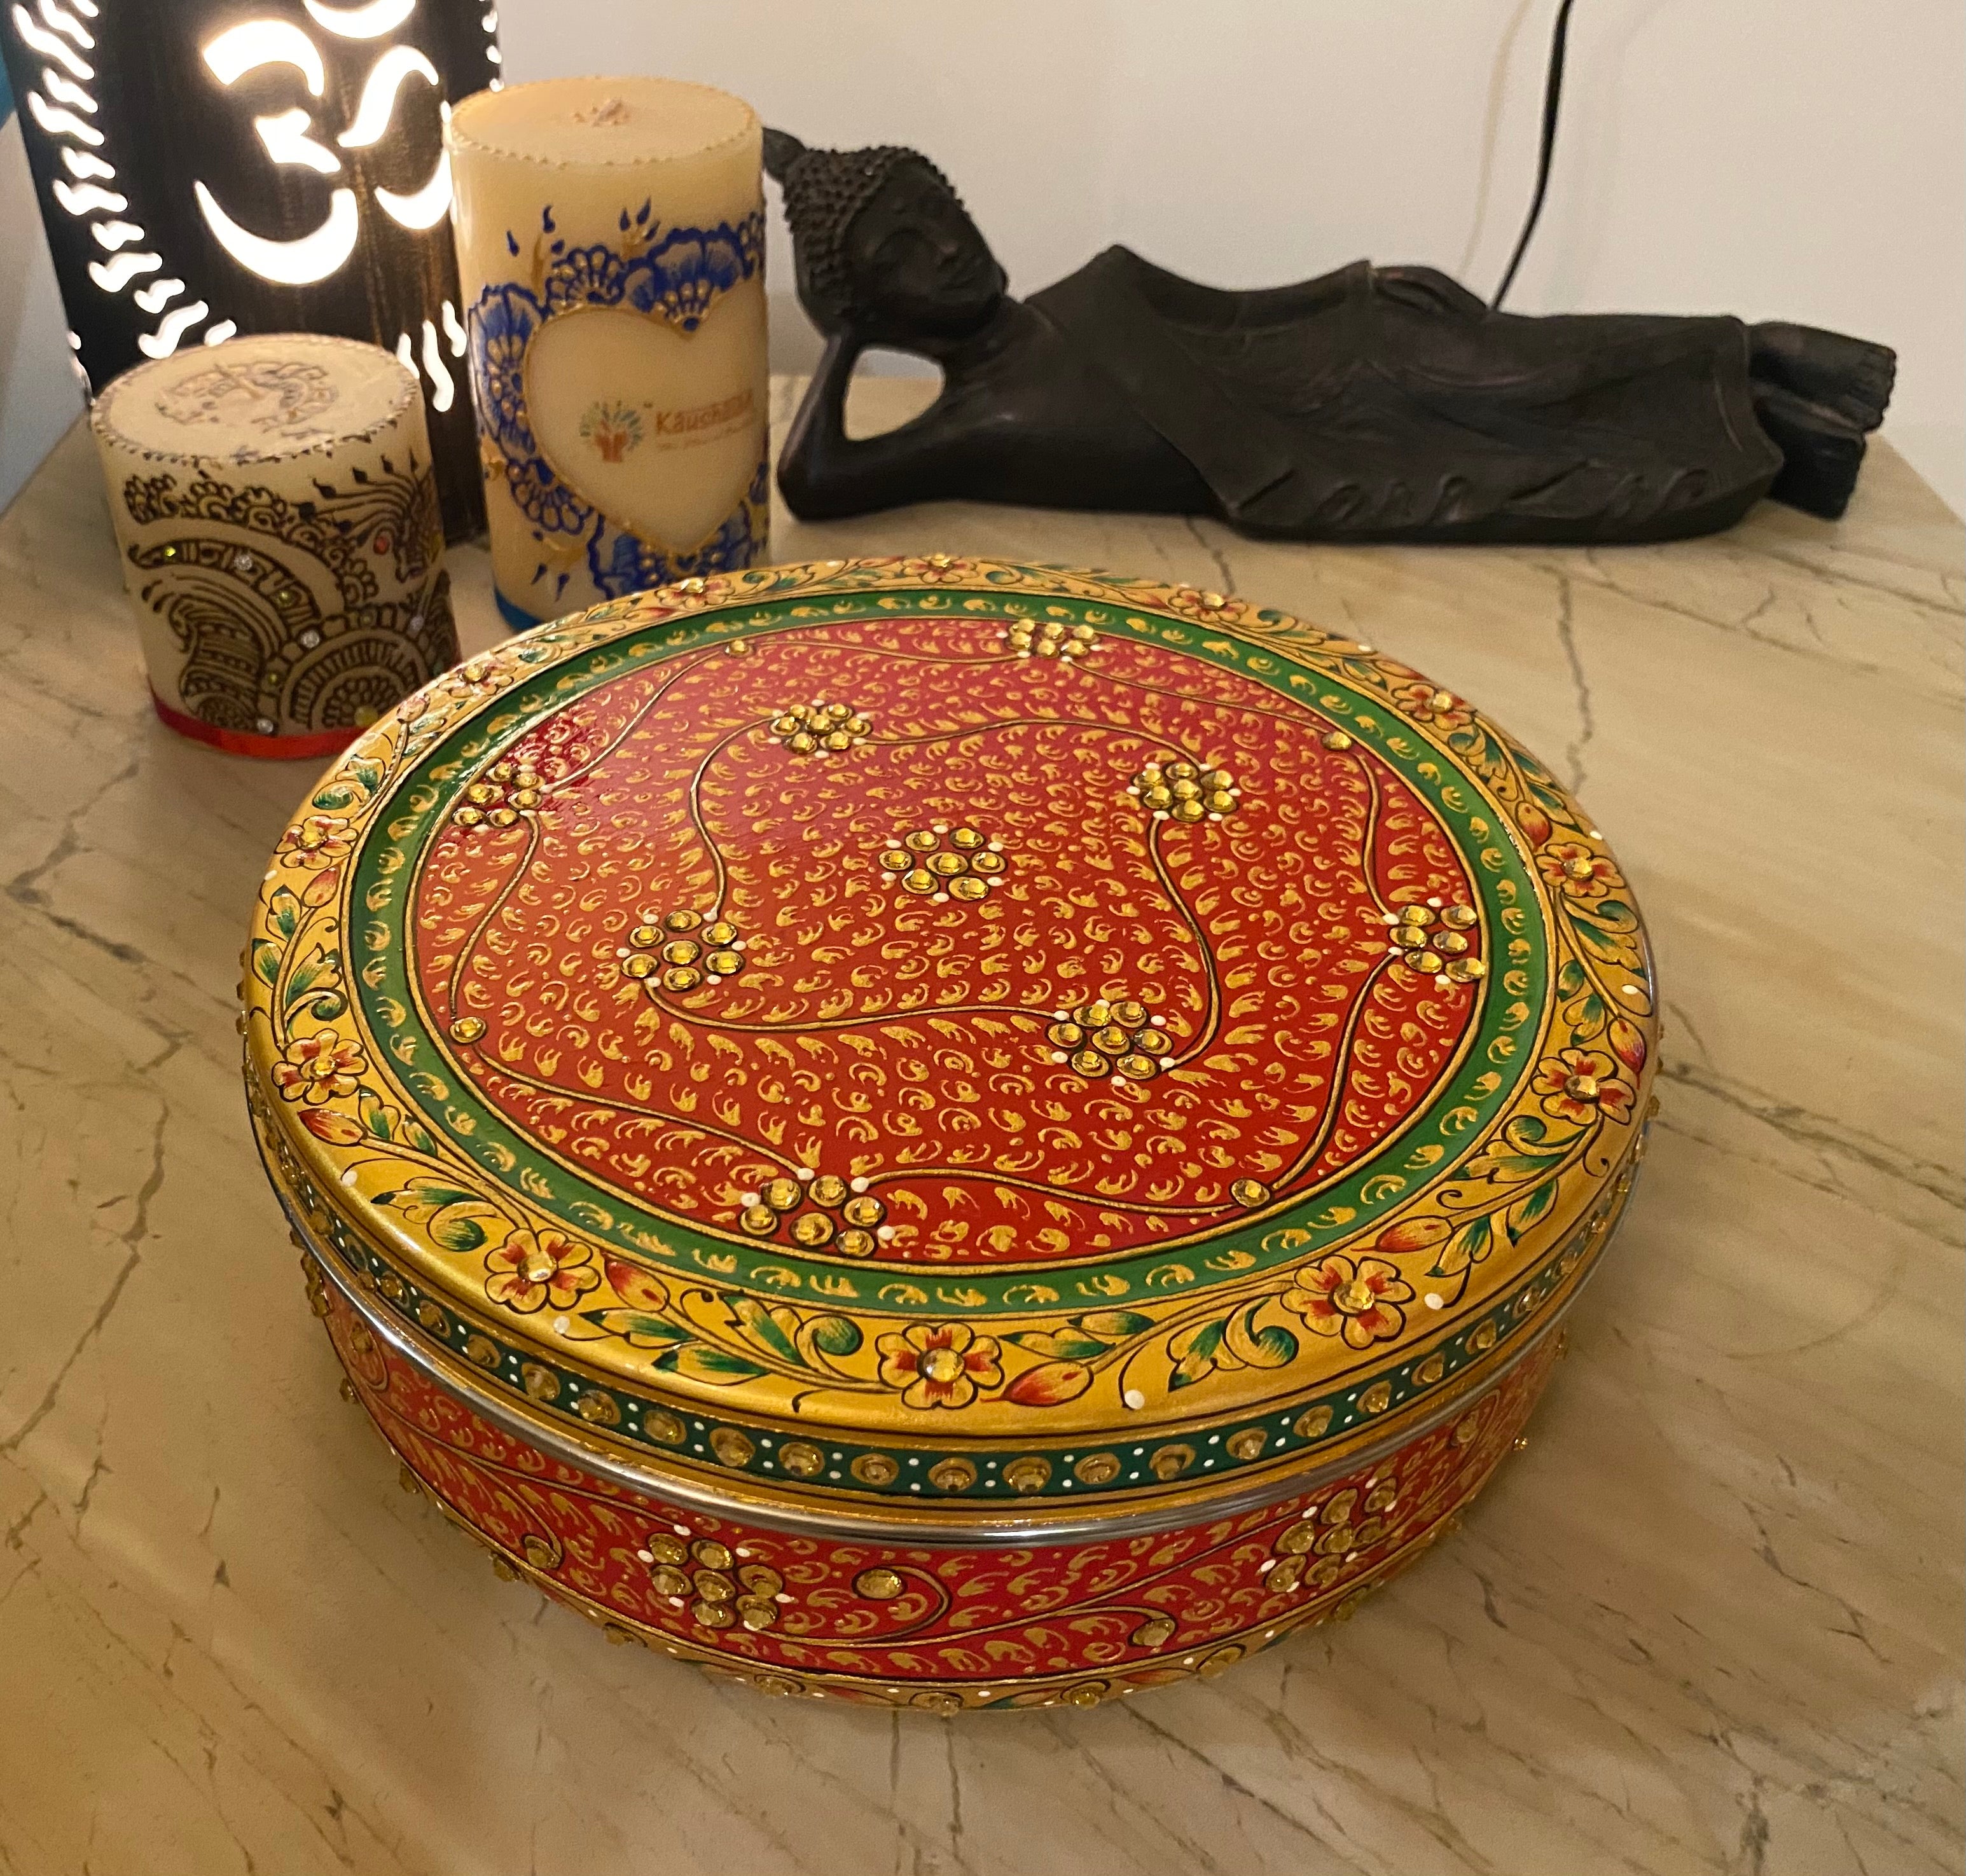 Kaushalam Hand Painted Spice Box - Masala Box, Spice Containers, Indian Masala daani